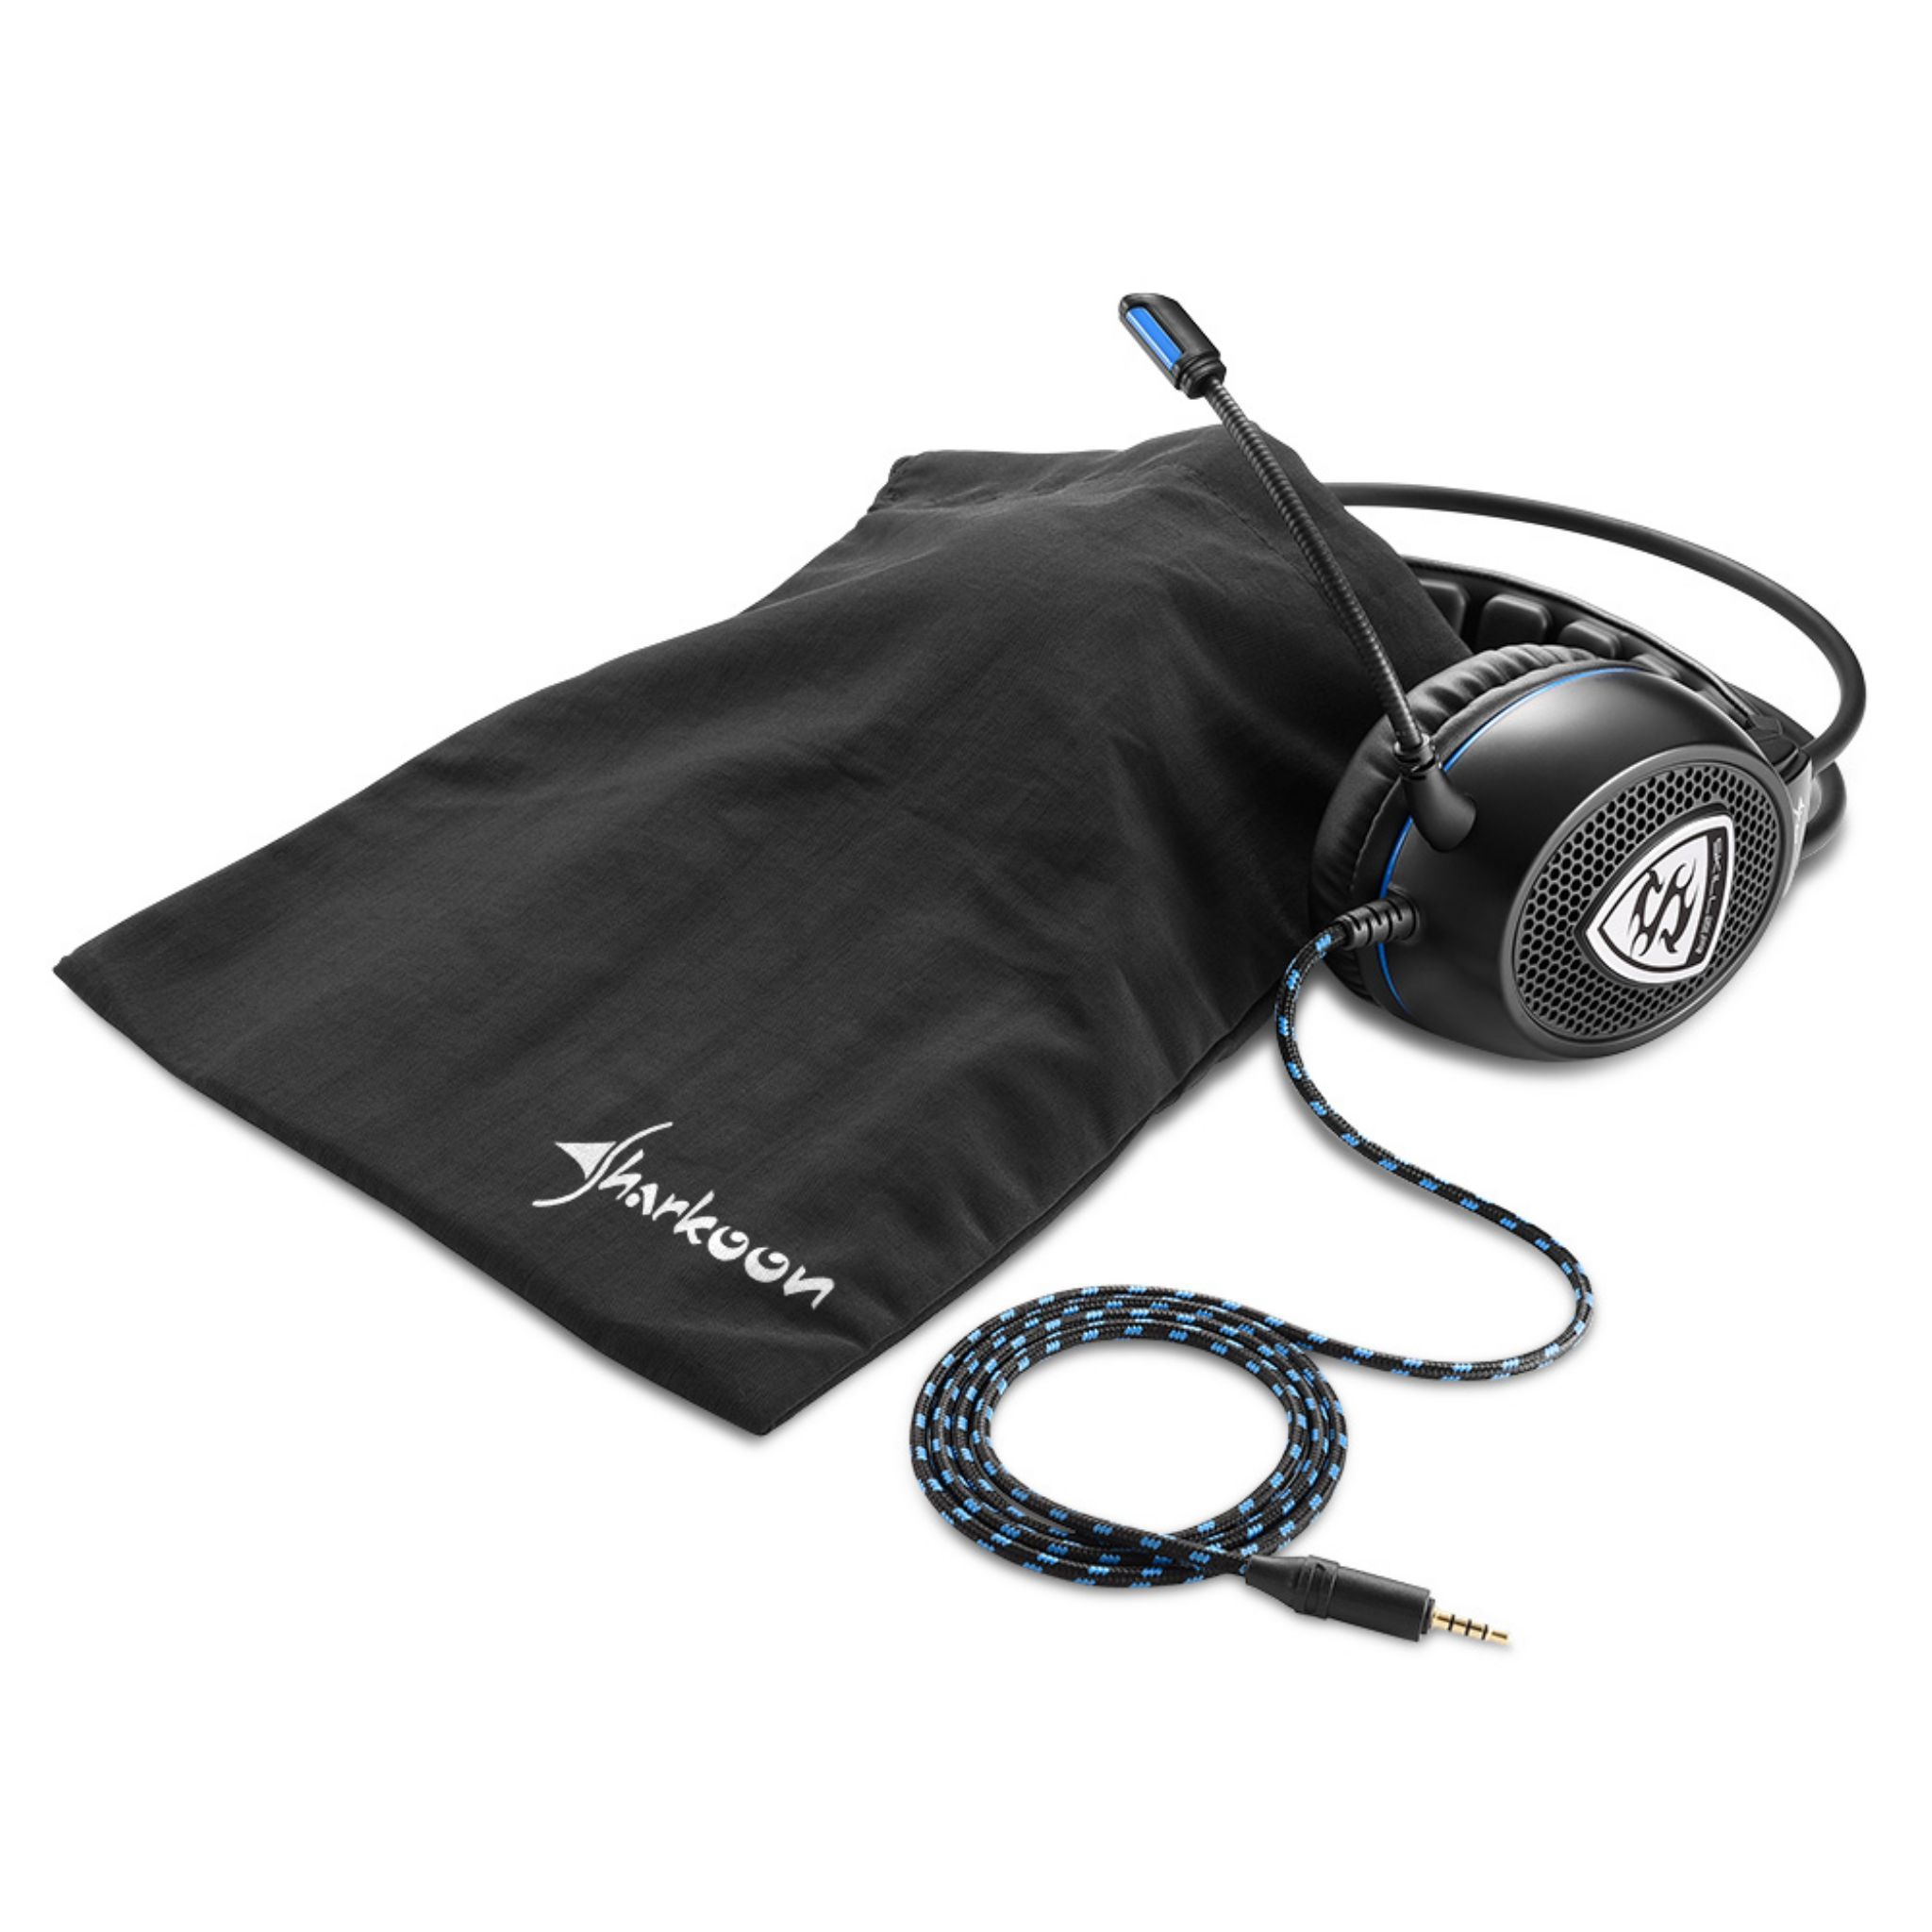 Schwarz Headset SHARKOON Skiller On-ear SGH1,